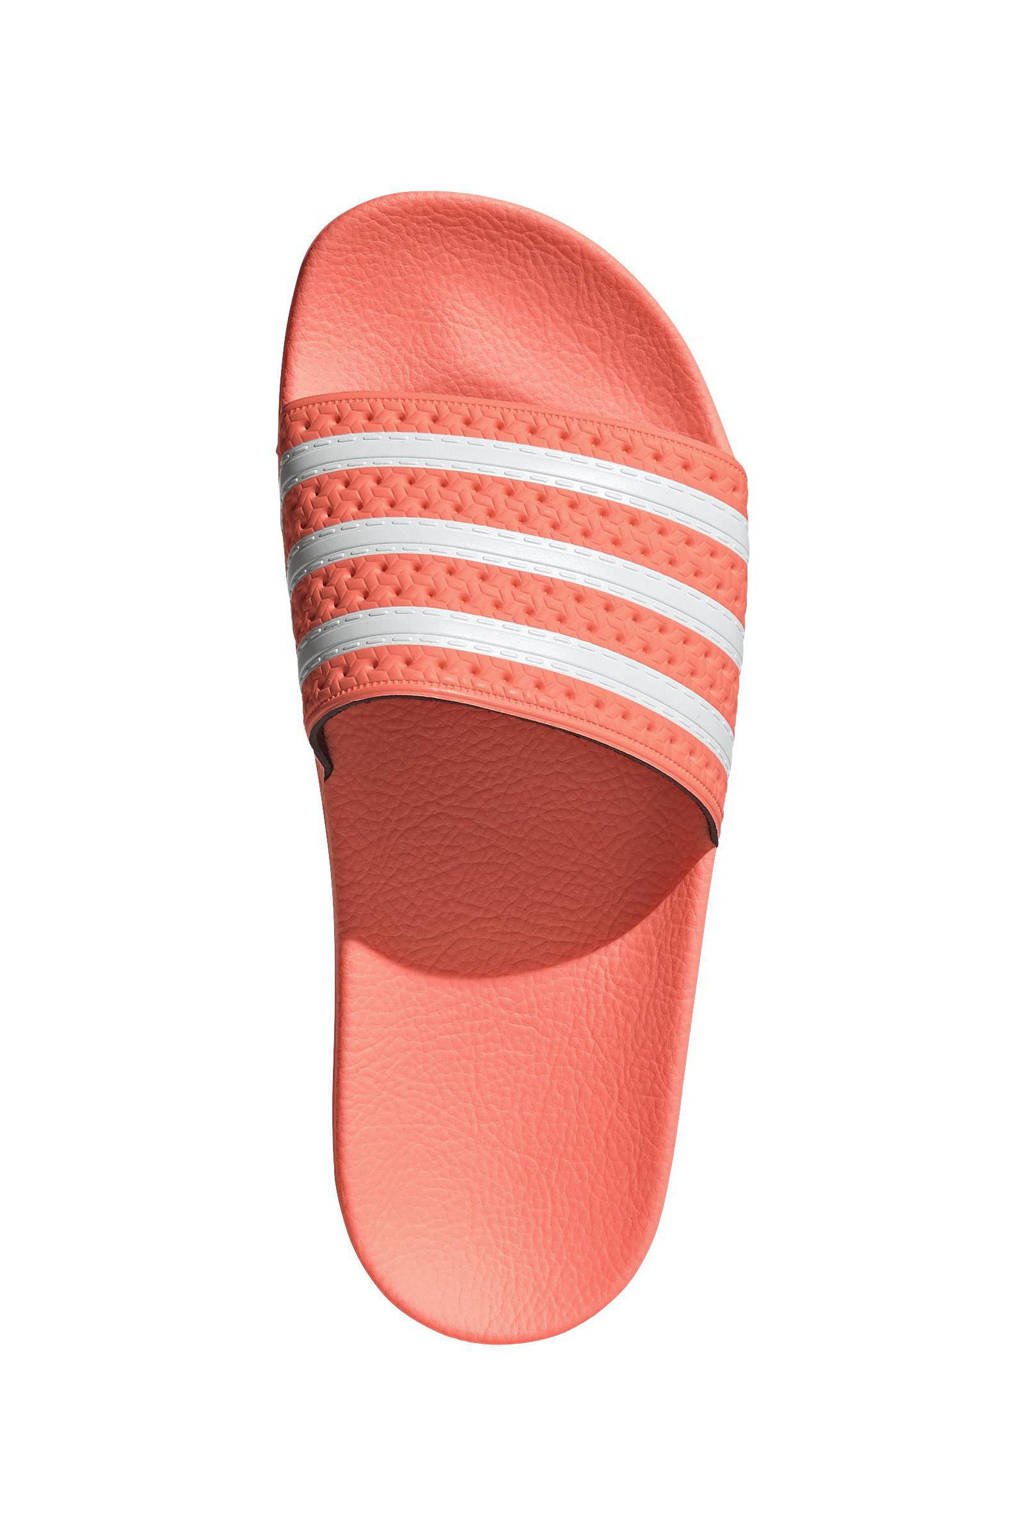 lezing Smelten Humaan adidas Originals Adilette slippers neonroze/wit | wehkamp